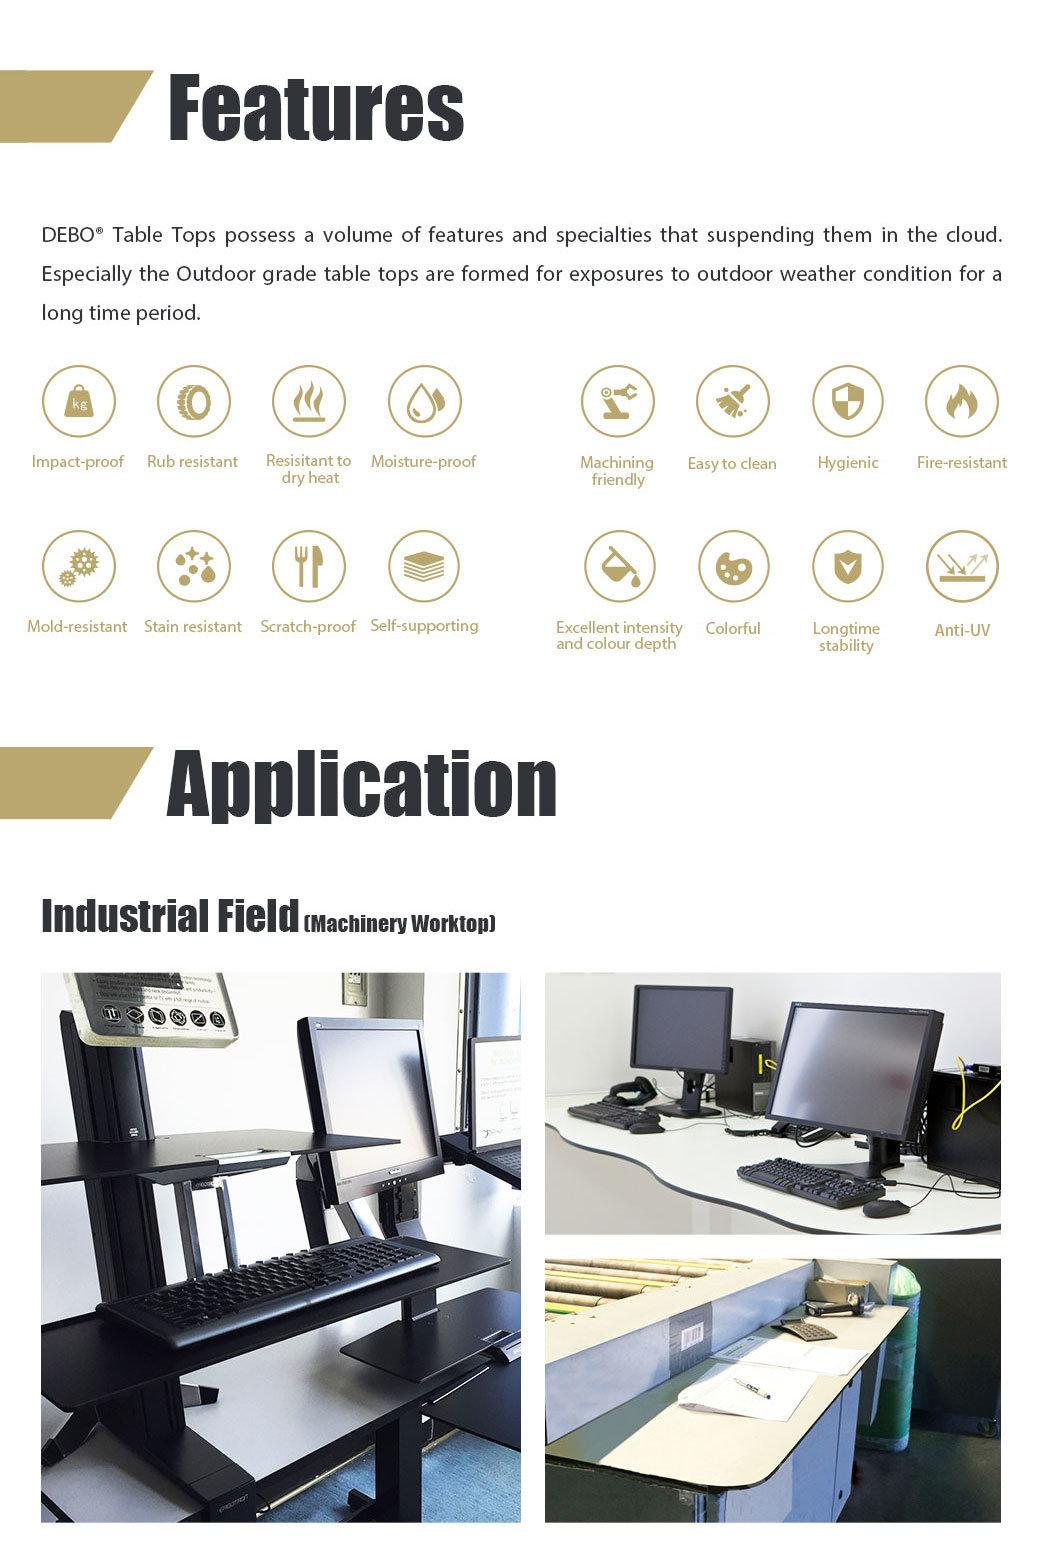 Office Furniture Debo Luxury HPL Compact Laminate Tabletop